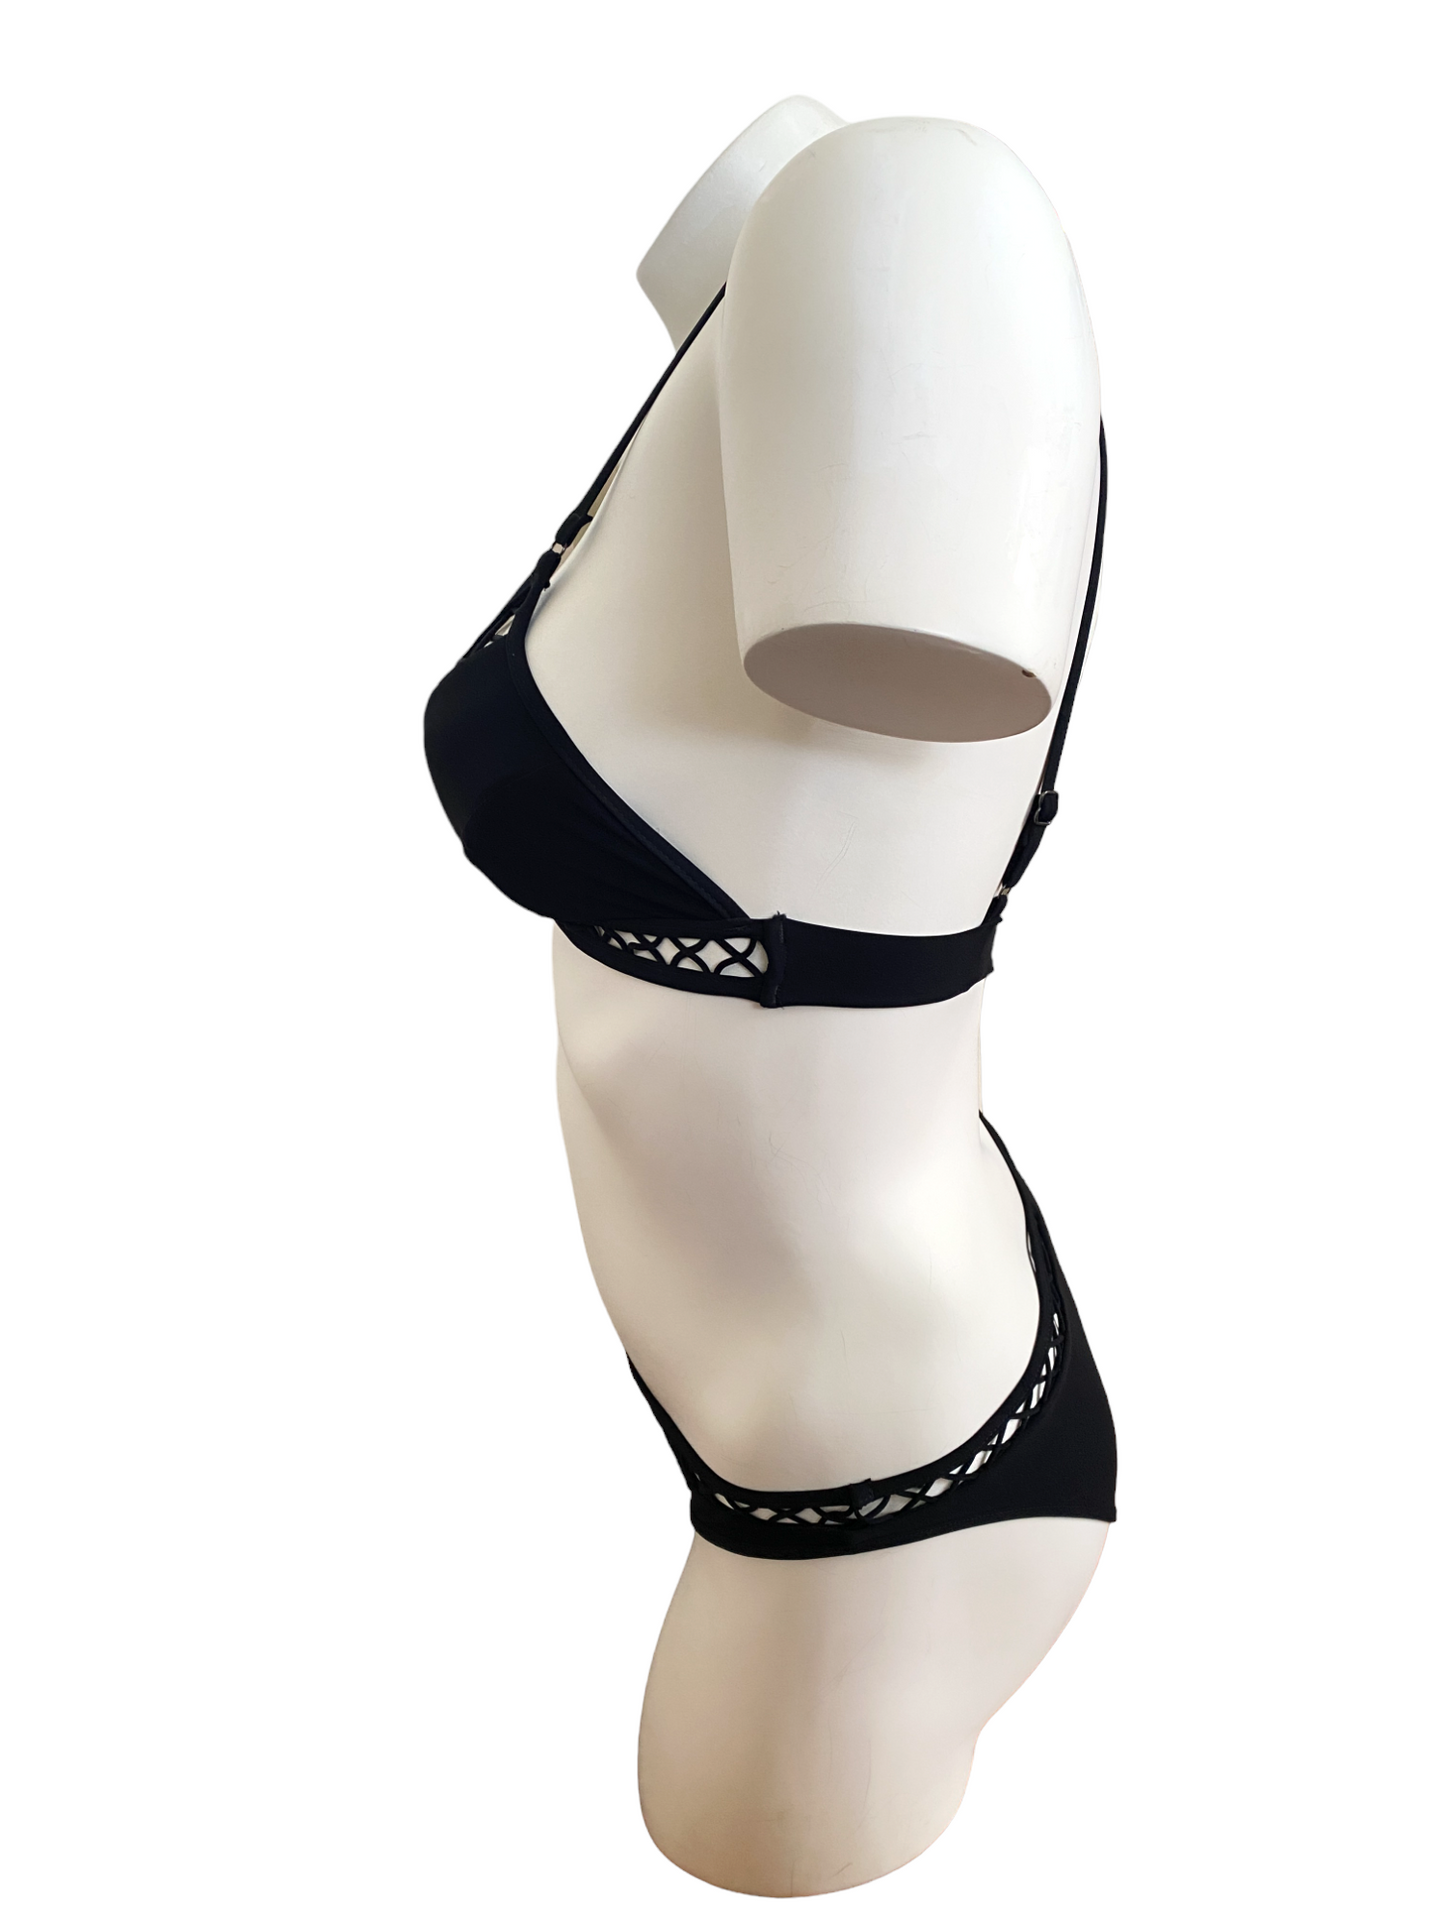 Zimmermann Paradiso Lattice Bikini Set | Black | BEST SELLER Size 0 $350 RRP